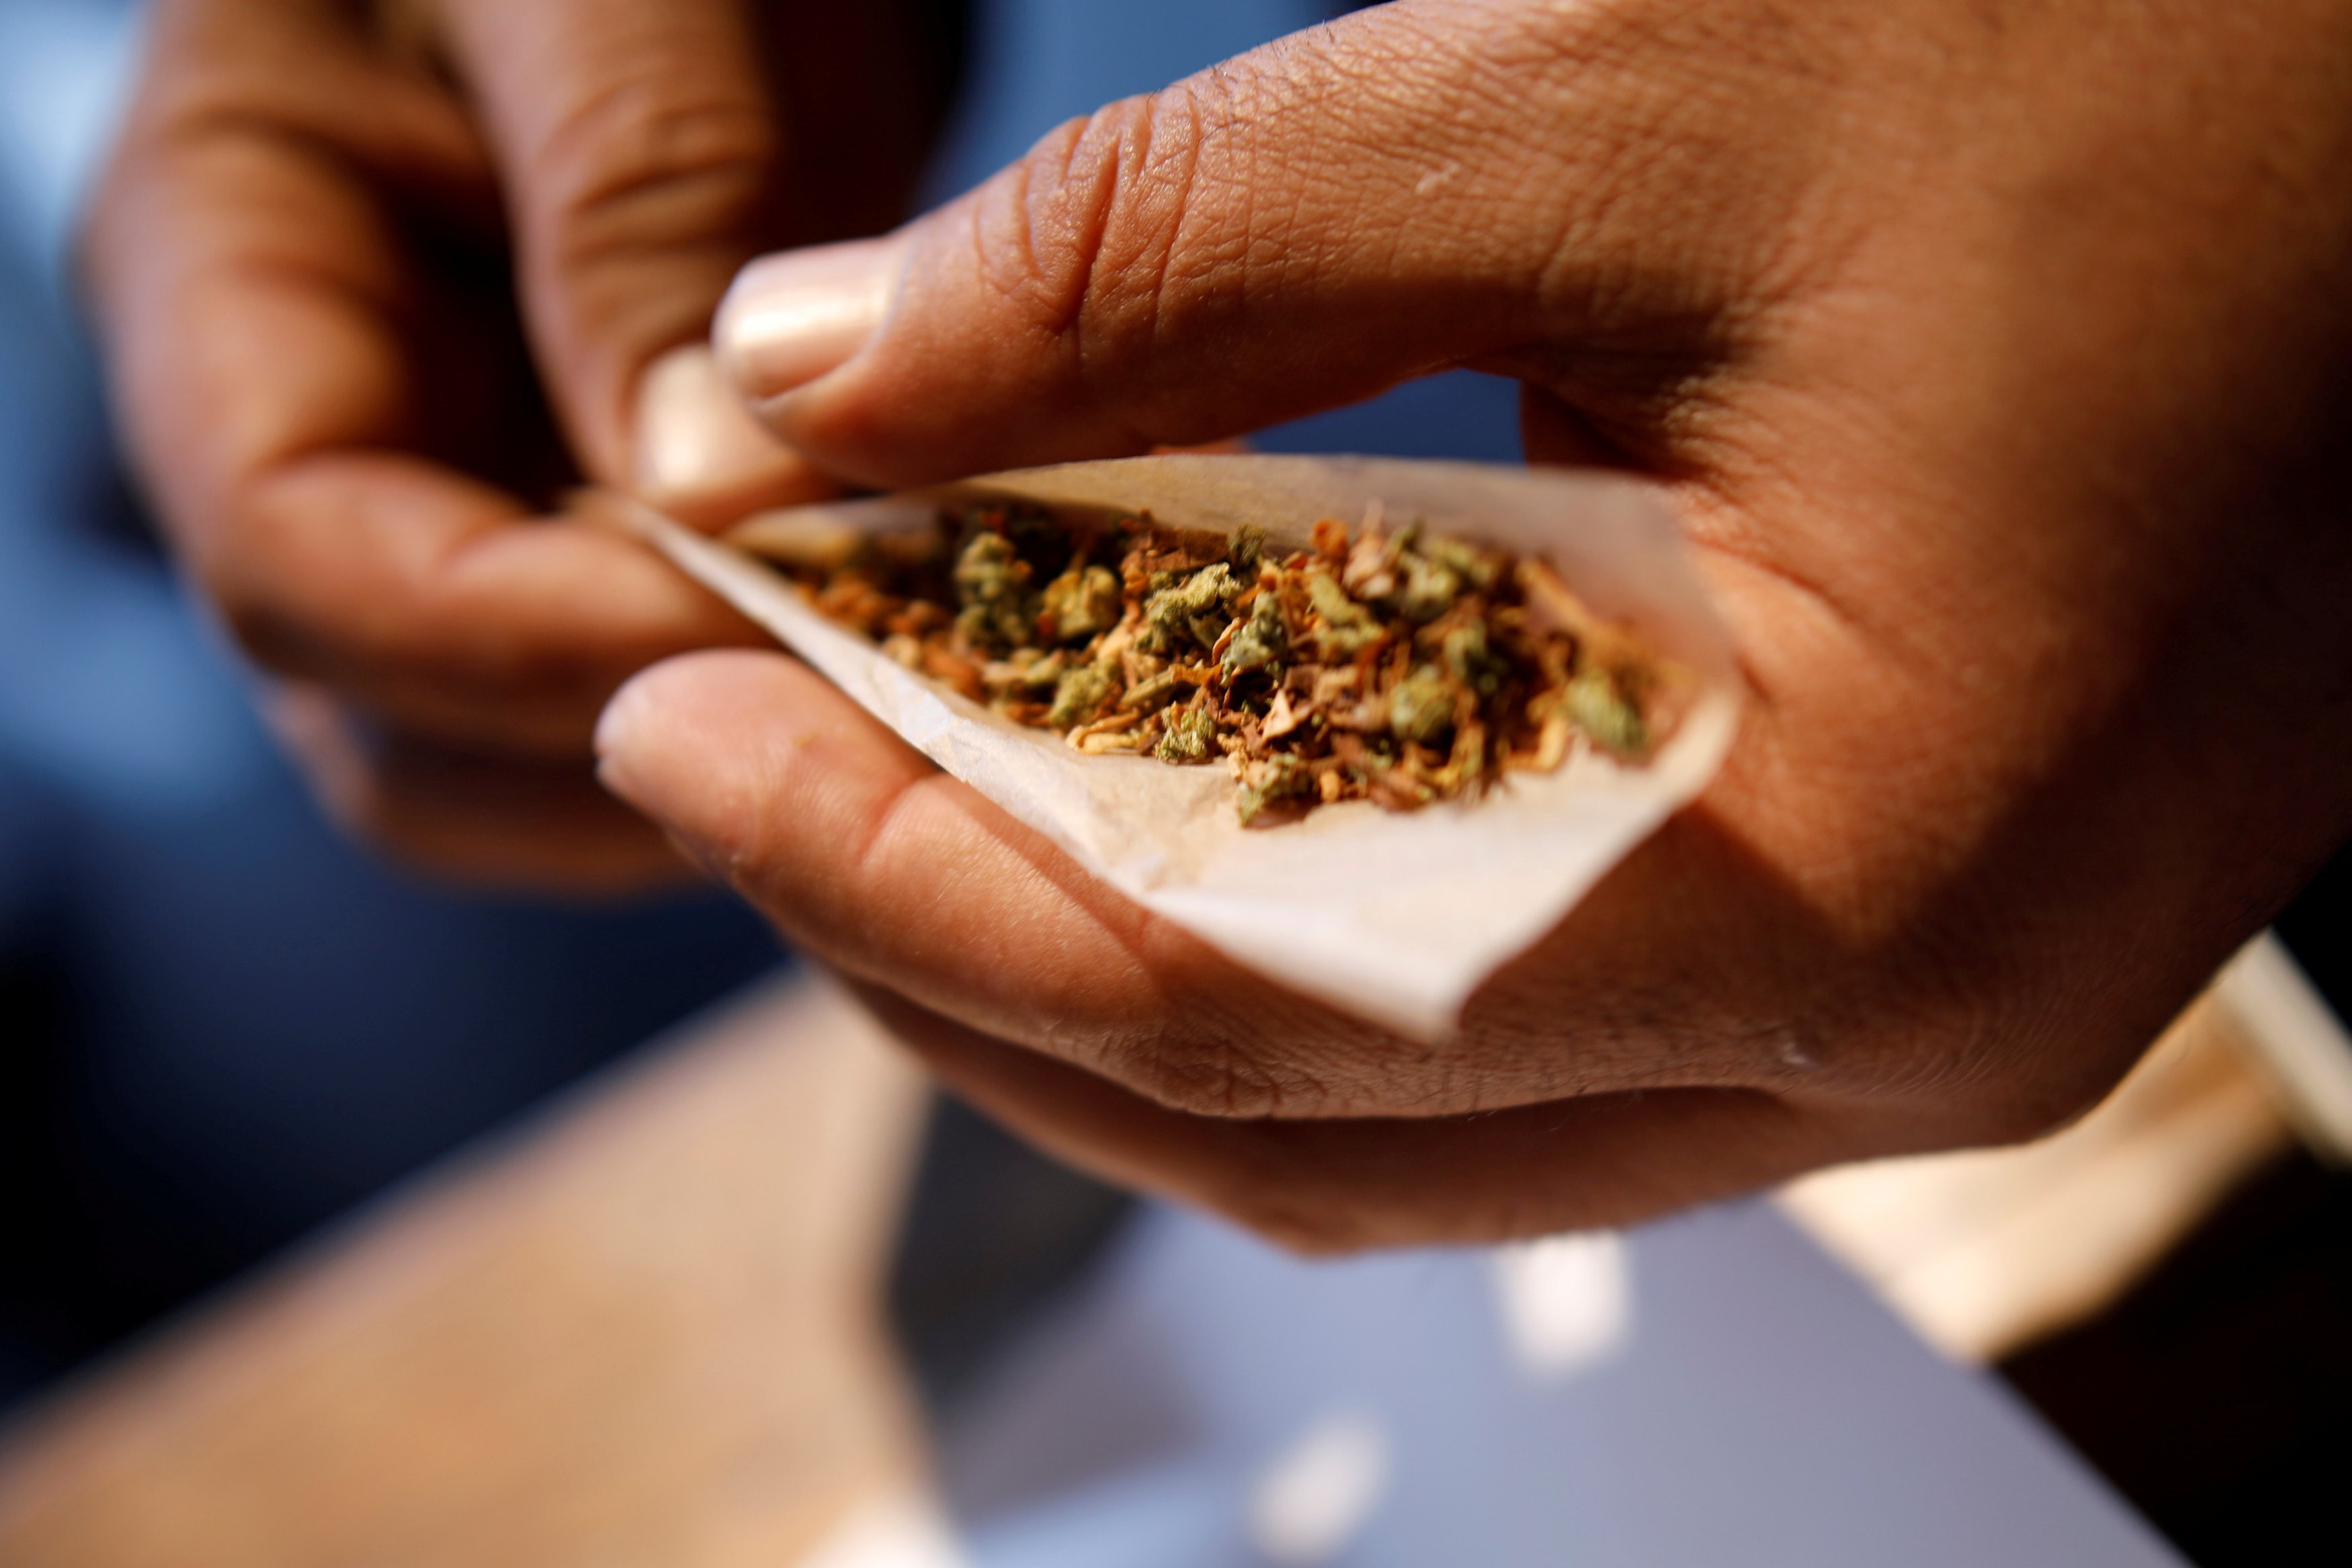 A man prepares a mix of tobacco and marijuana for smoking. Photo: Reuters